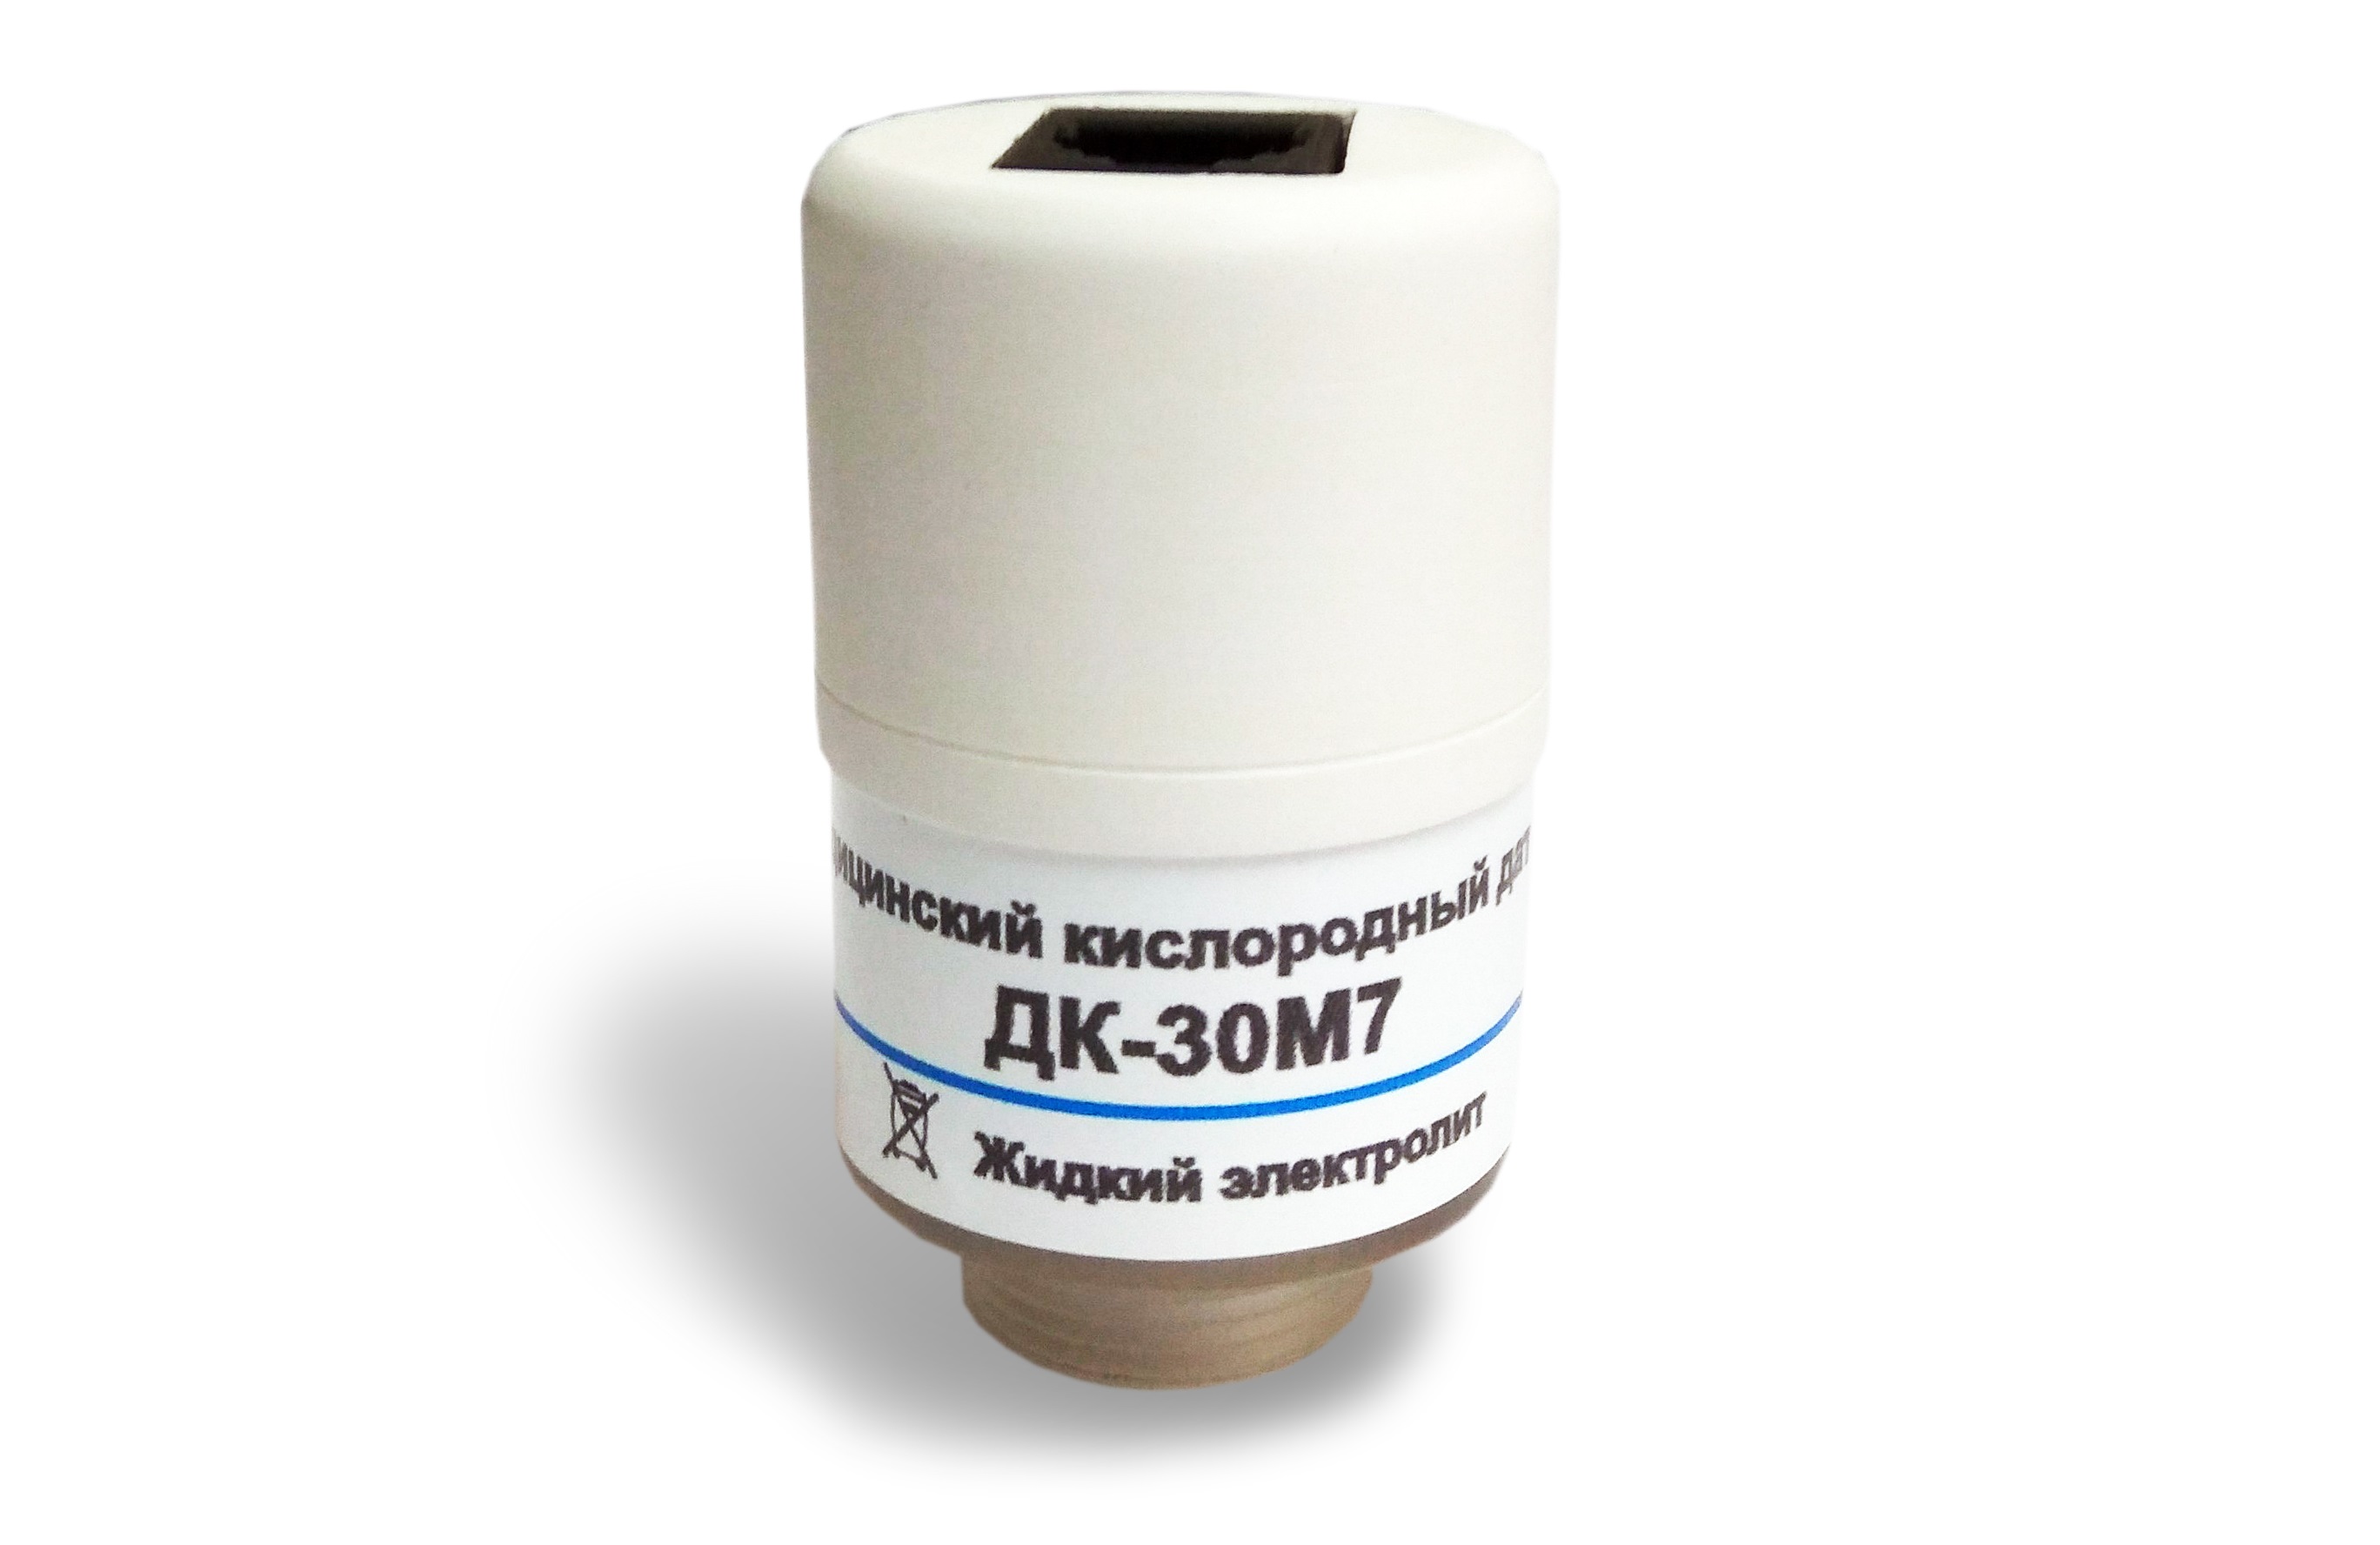 Medical oxygen sensor DK-30M7